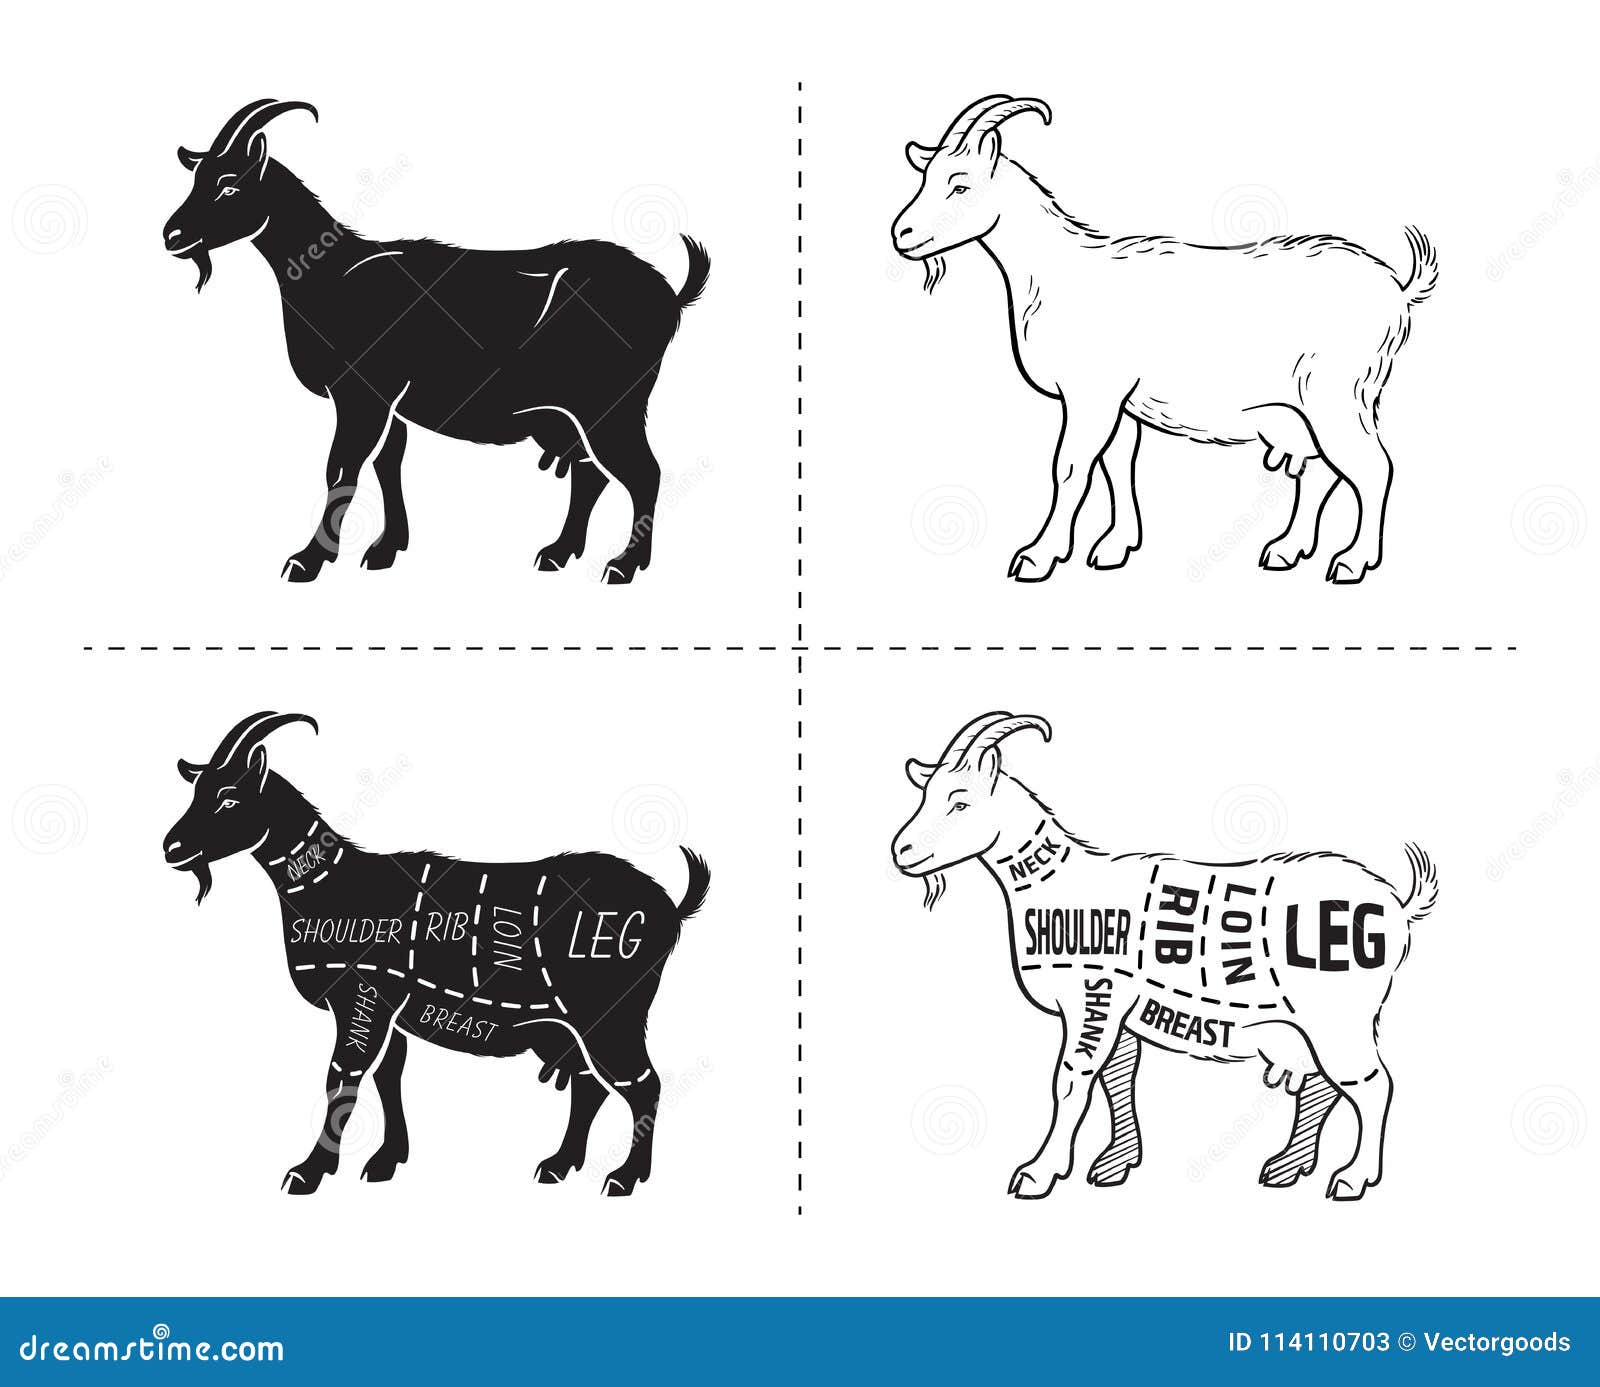 Goat Butchering Chart